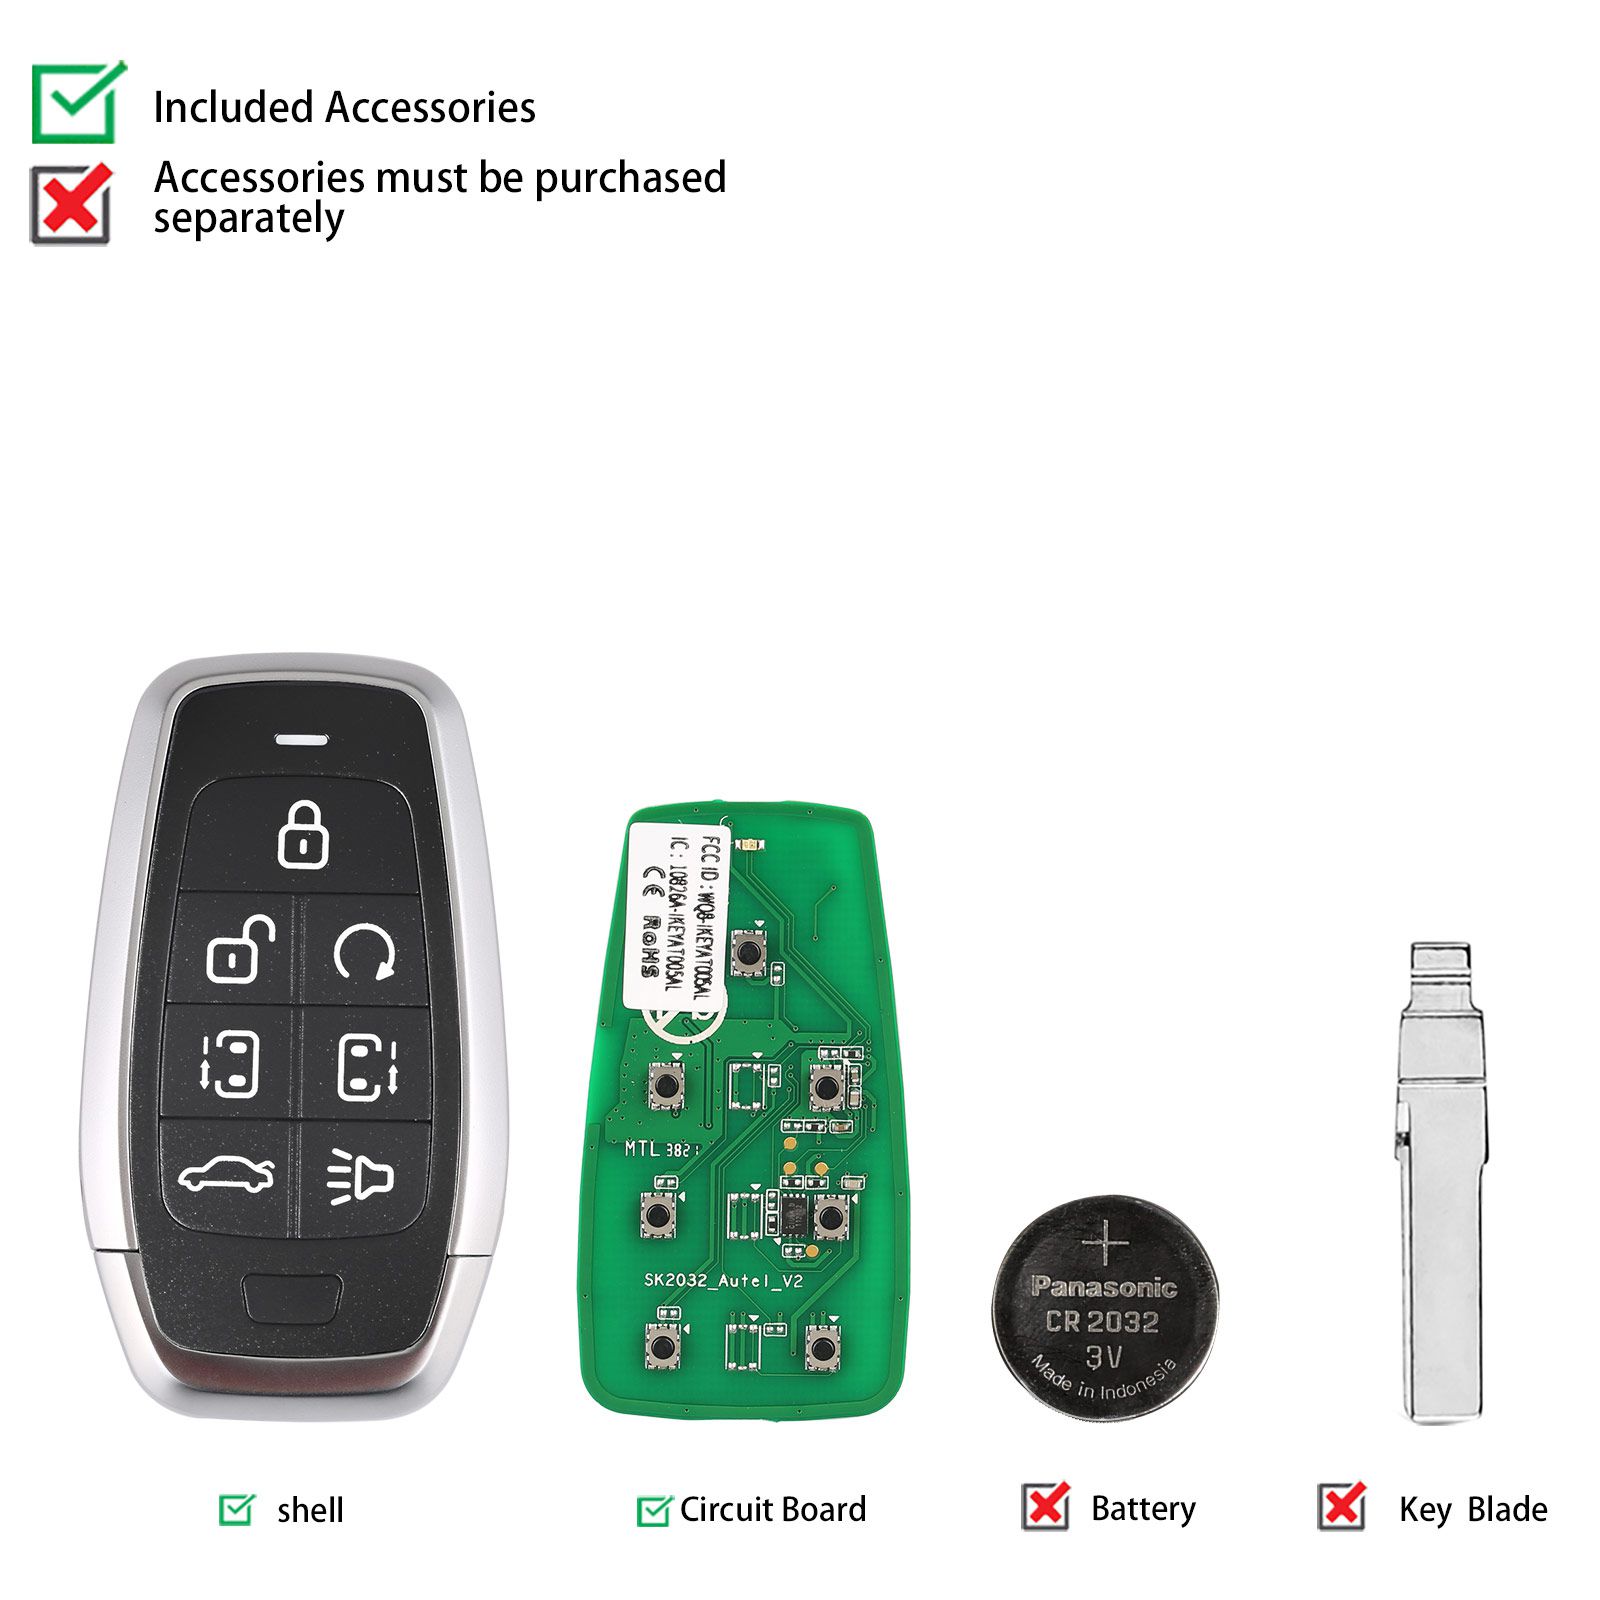 AUTEL IKEYAT007AL 7 Buttons Independent Universal Smart Key 5pcs/lot